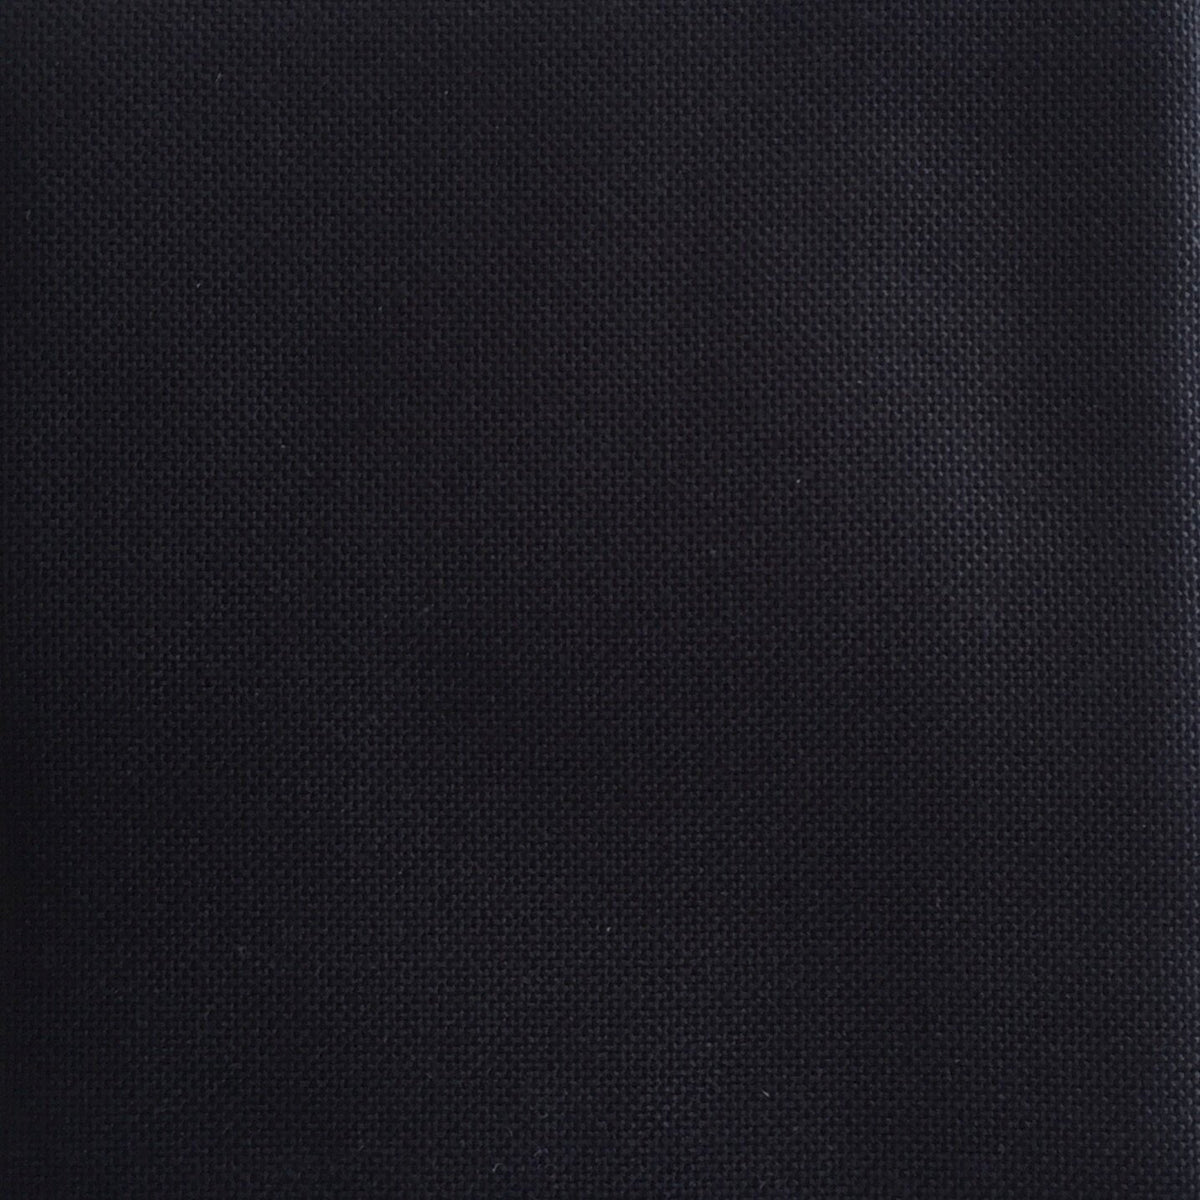 Jobelan Premium Fabric / 28ct Black